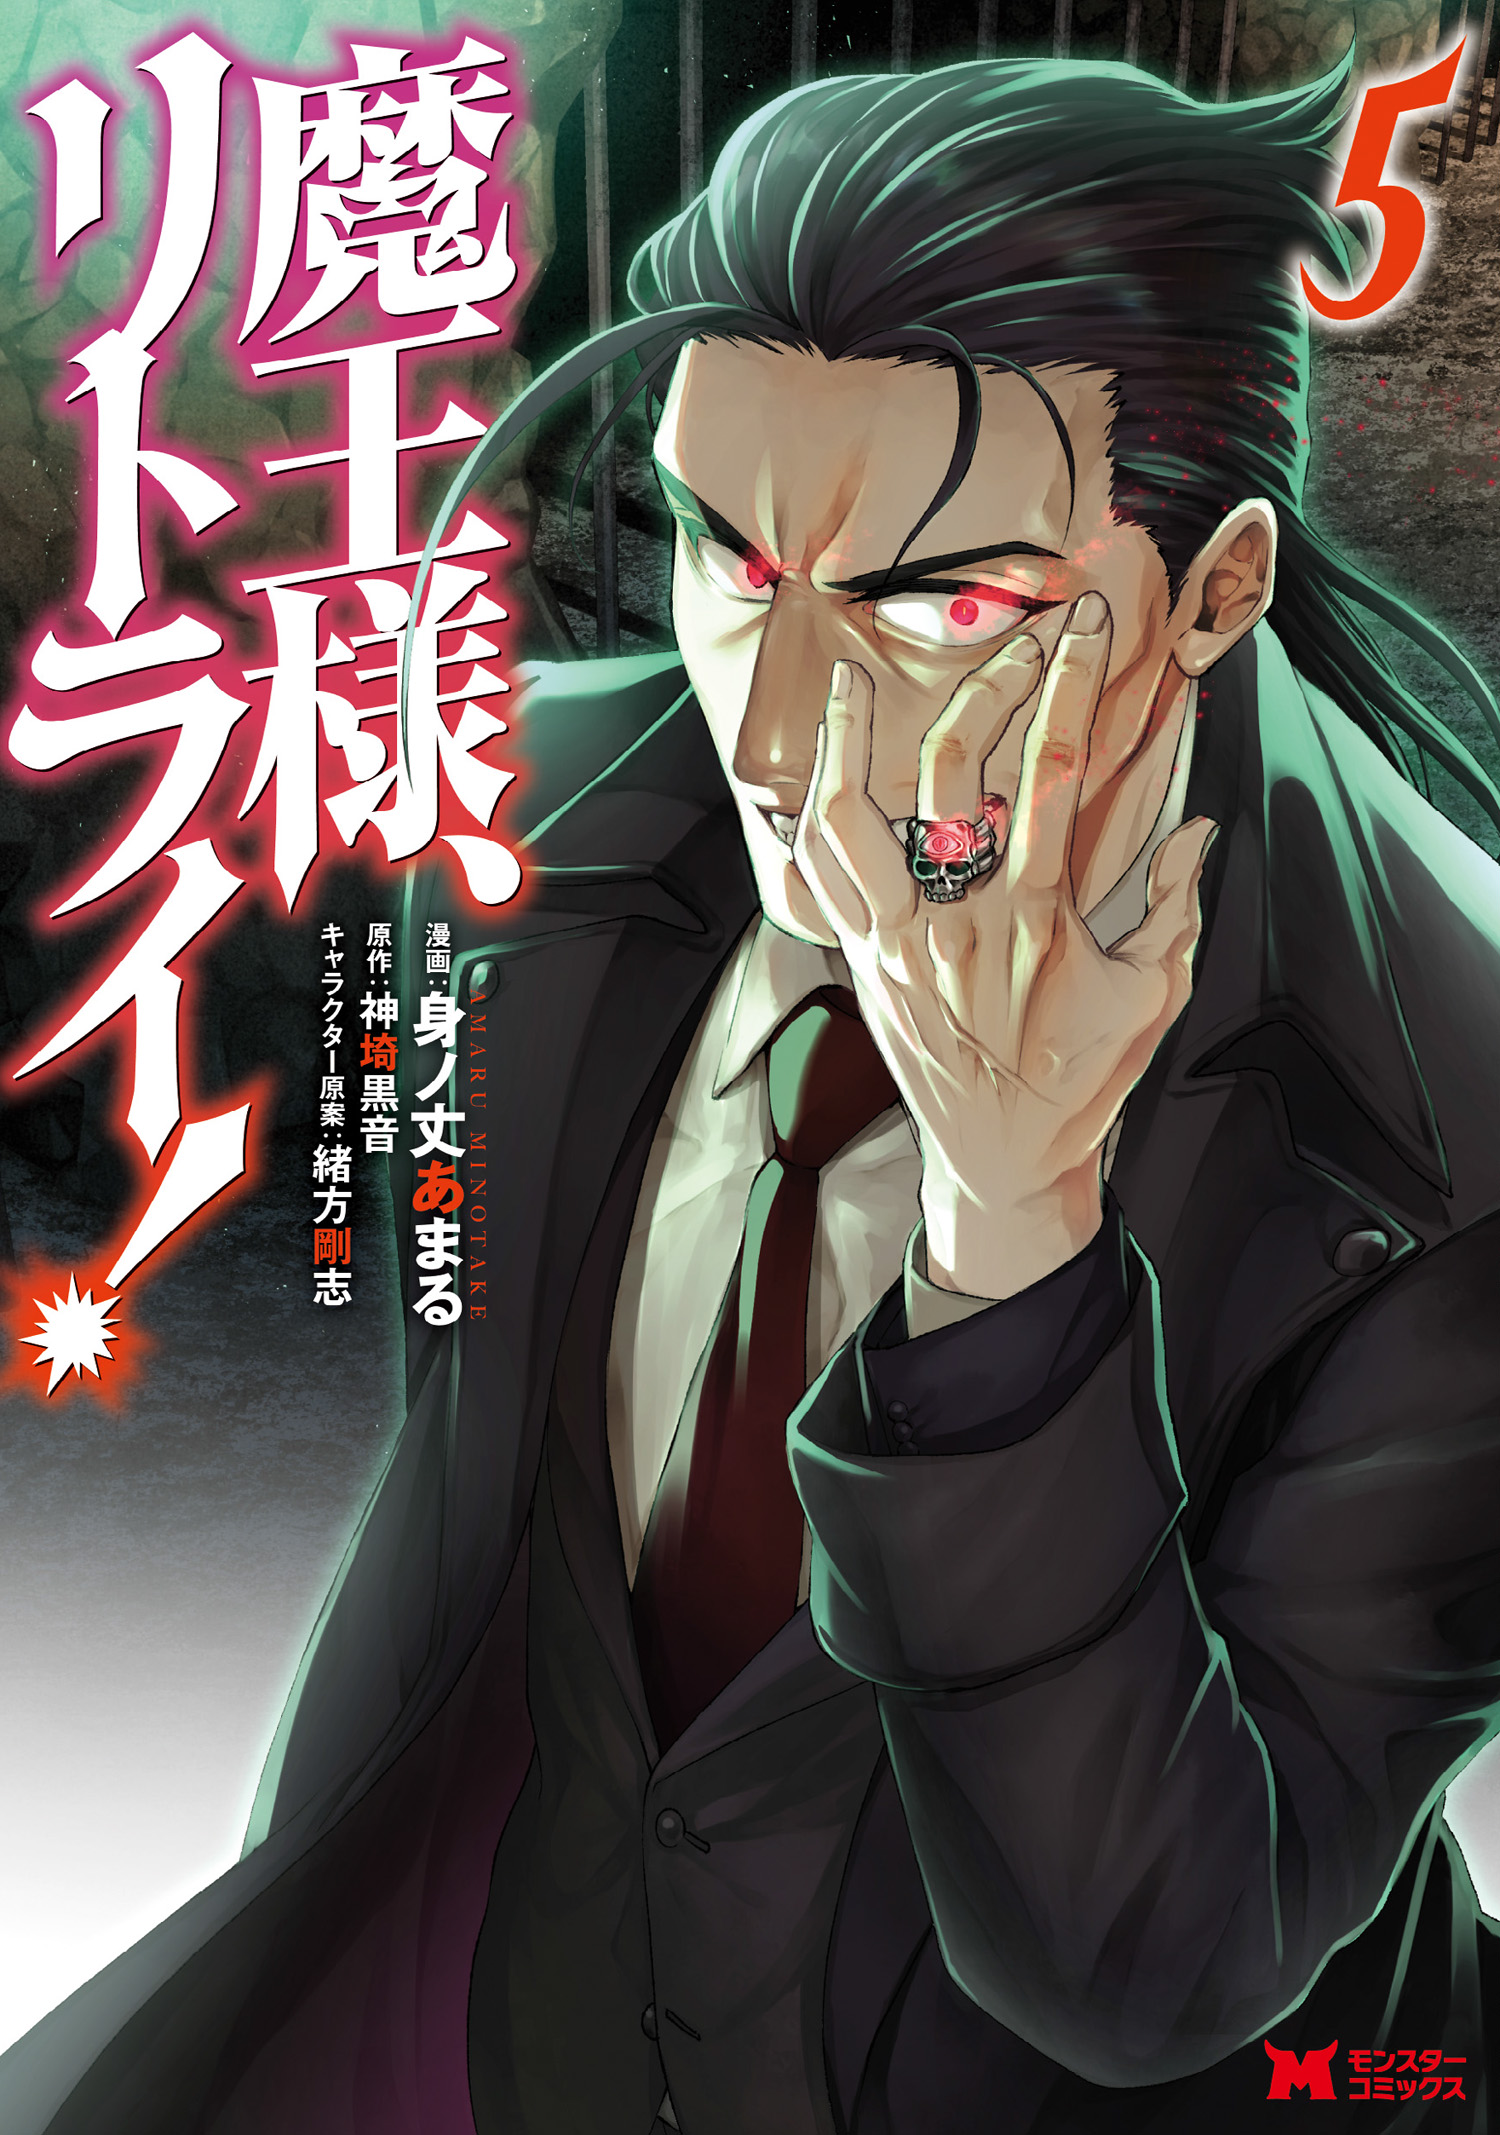 Maou-sama, Retry! - Demon Lord, Retry! - Animes Online